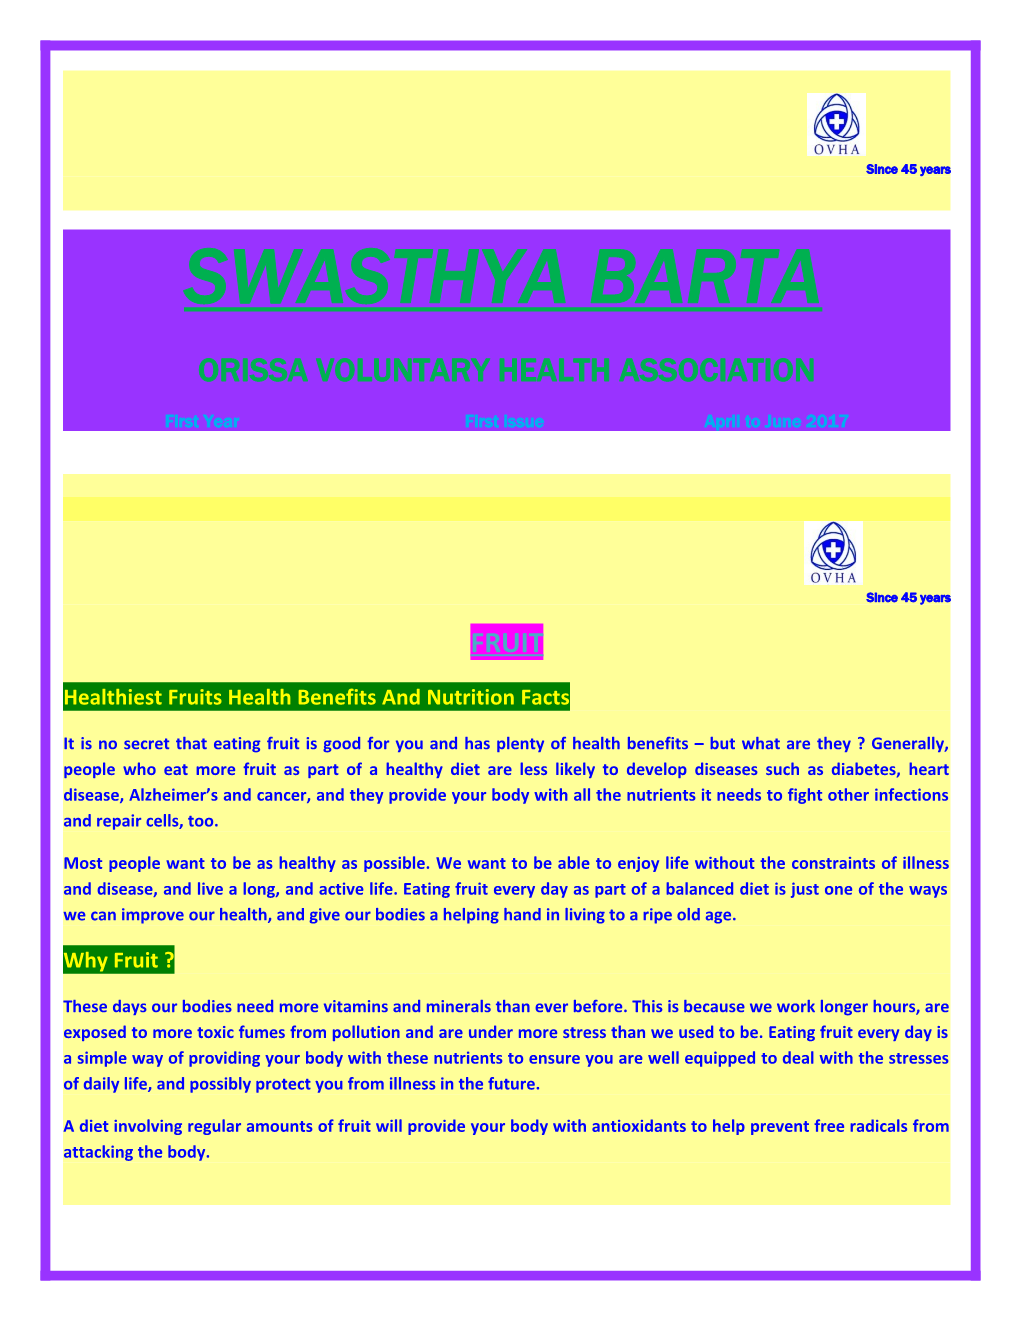 Orissa Voluntary Health Association